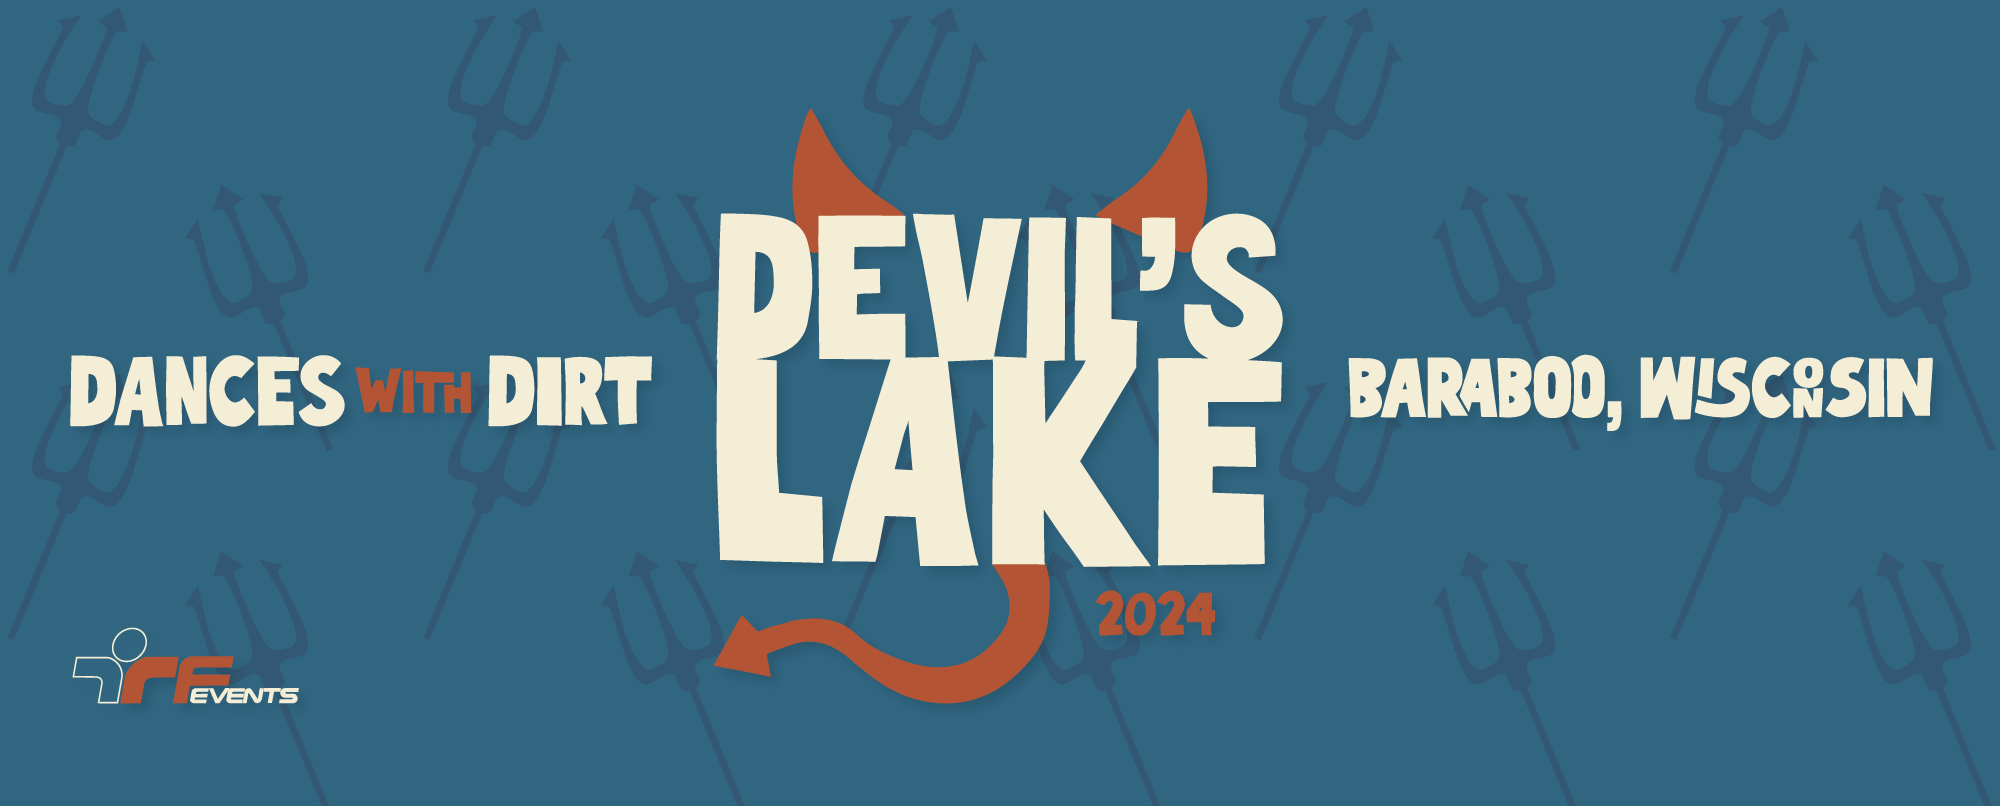 Devils Lake 2022 Web Banner 2